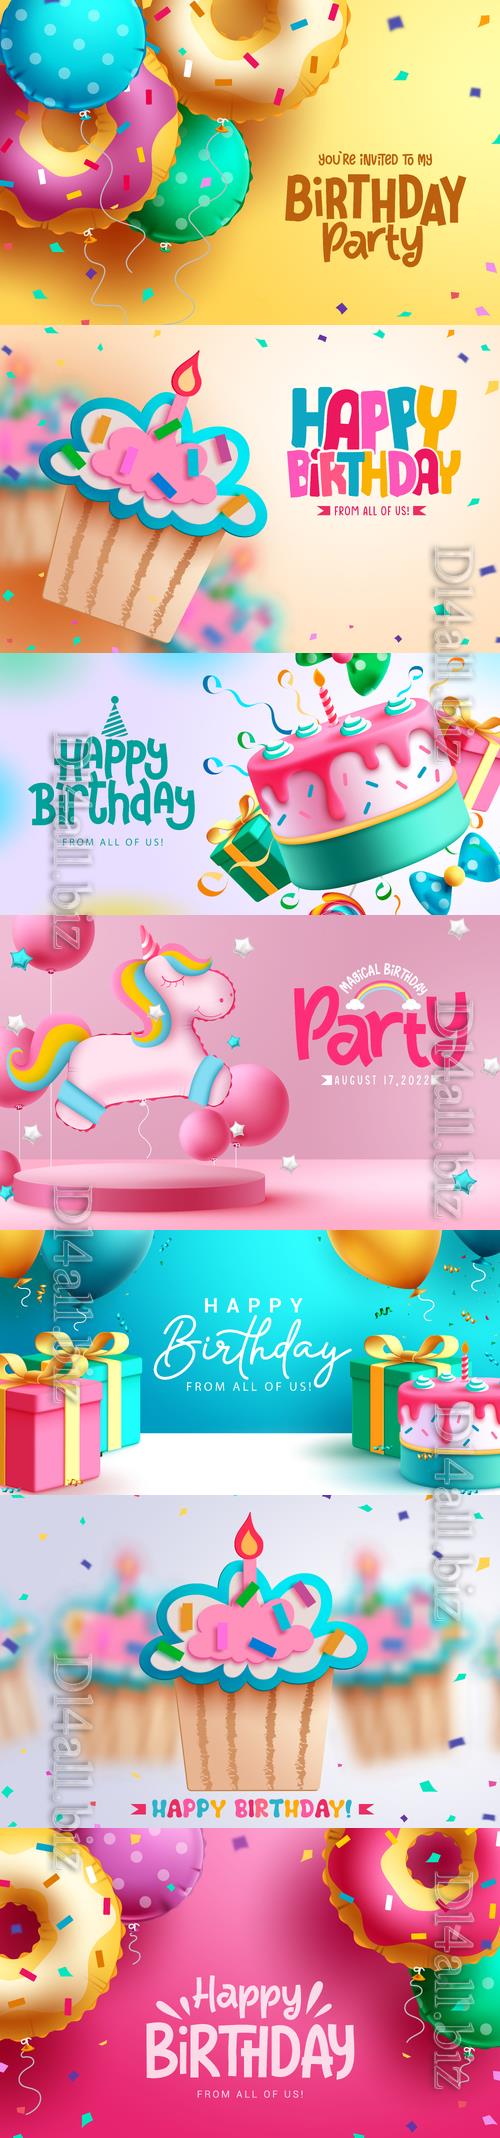 Birthday vector design, happy birthday cut cupcake elements